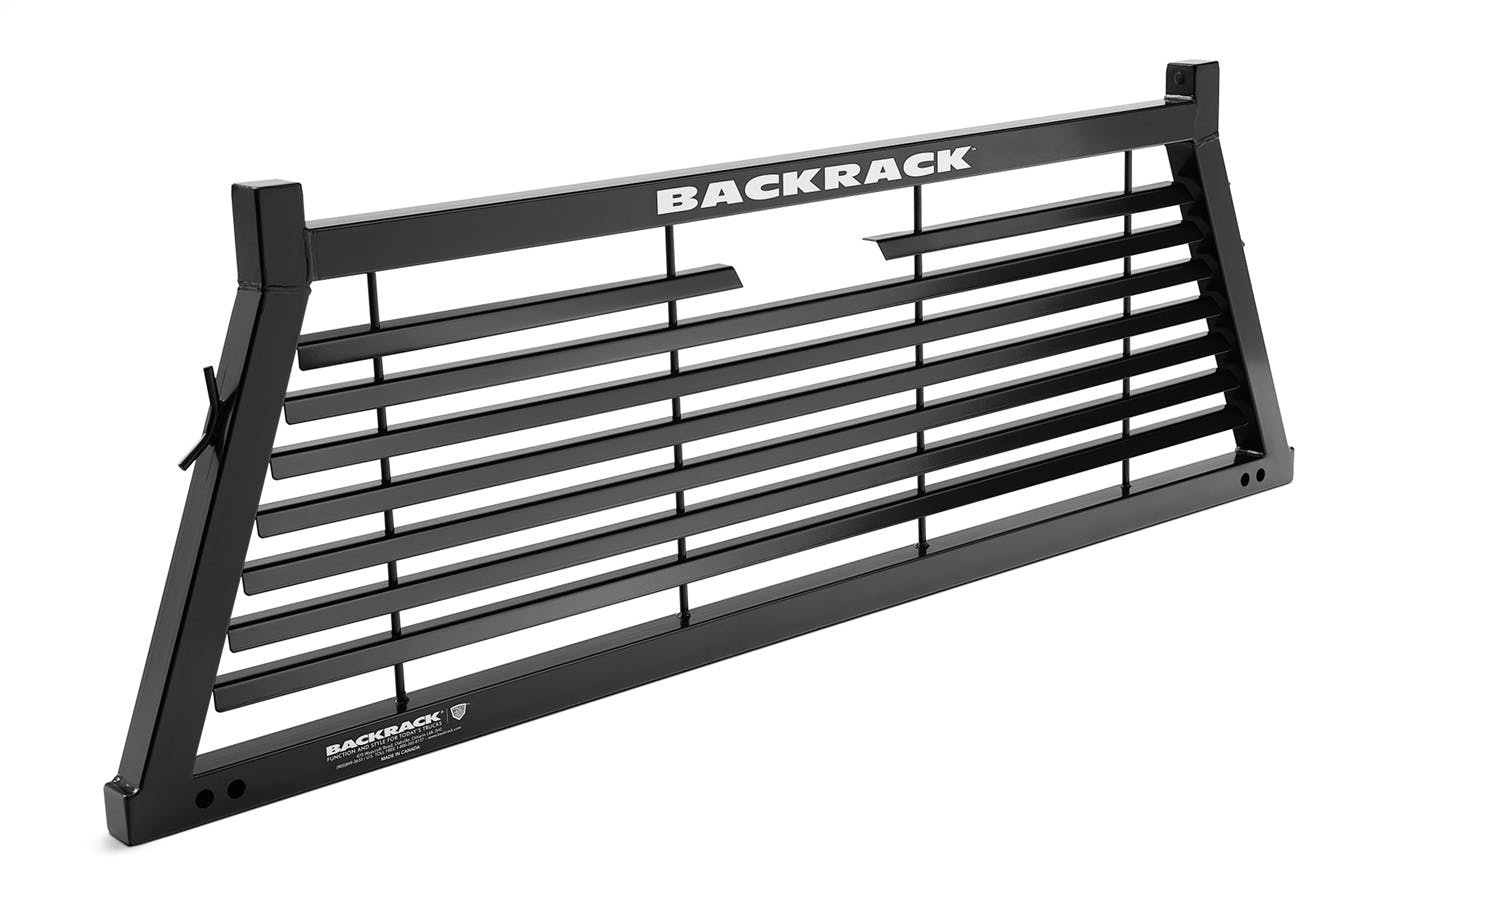 BACKRACK 12900 Frame Only, Hardware Kit Required - 30122